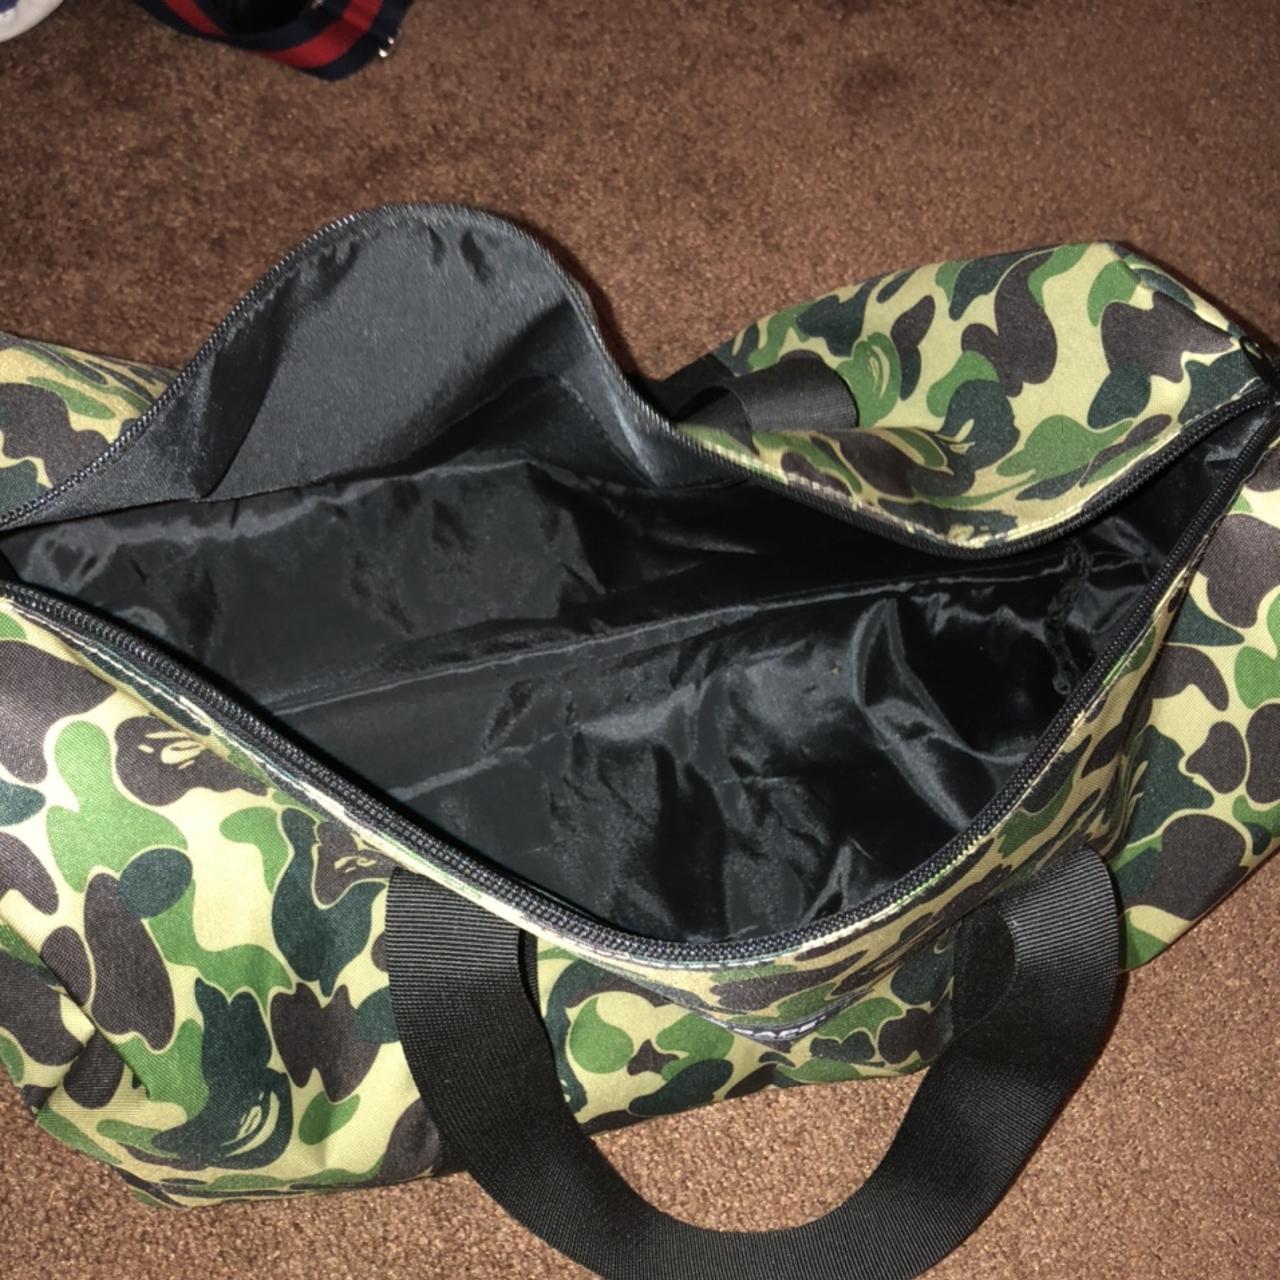 Drop Dayz - BAPE Duffle Bag - Get yourself a nice BAPE Duffle bag! - Only  available at dropdayz